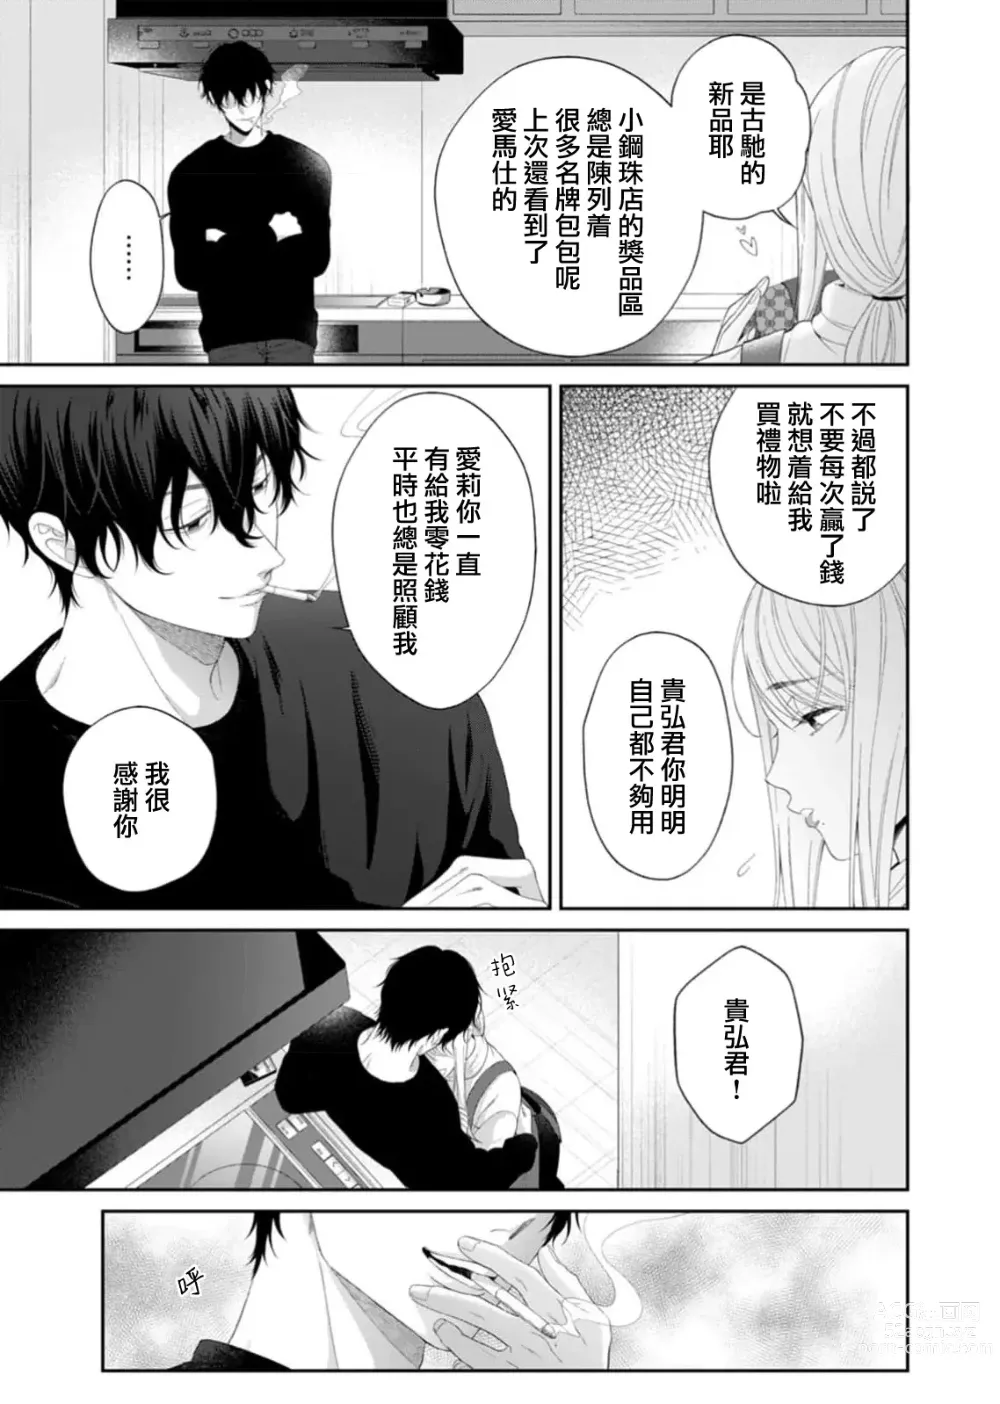 Page 6 of manga 将你所期望的悉数奉上——与另有隐情的软饭男友、深陷于令人沉溺的执着H